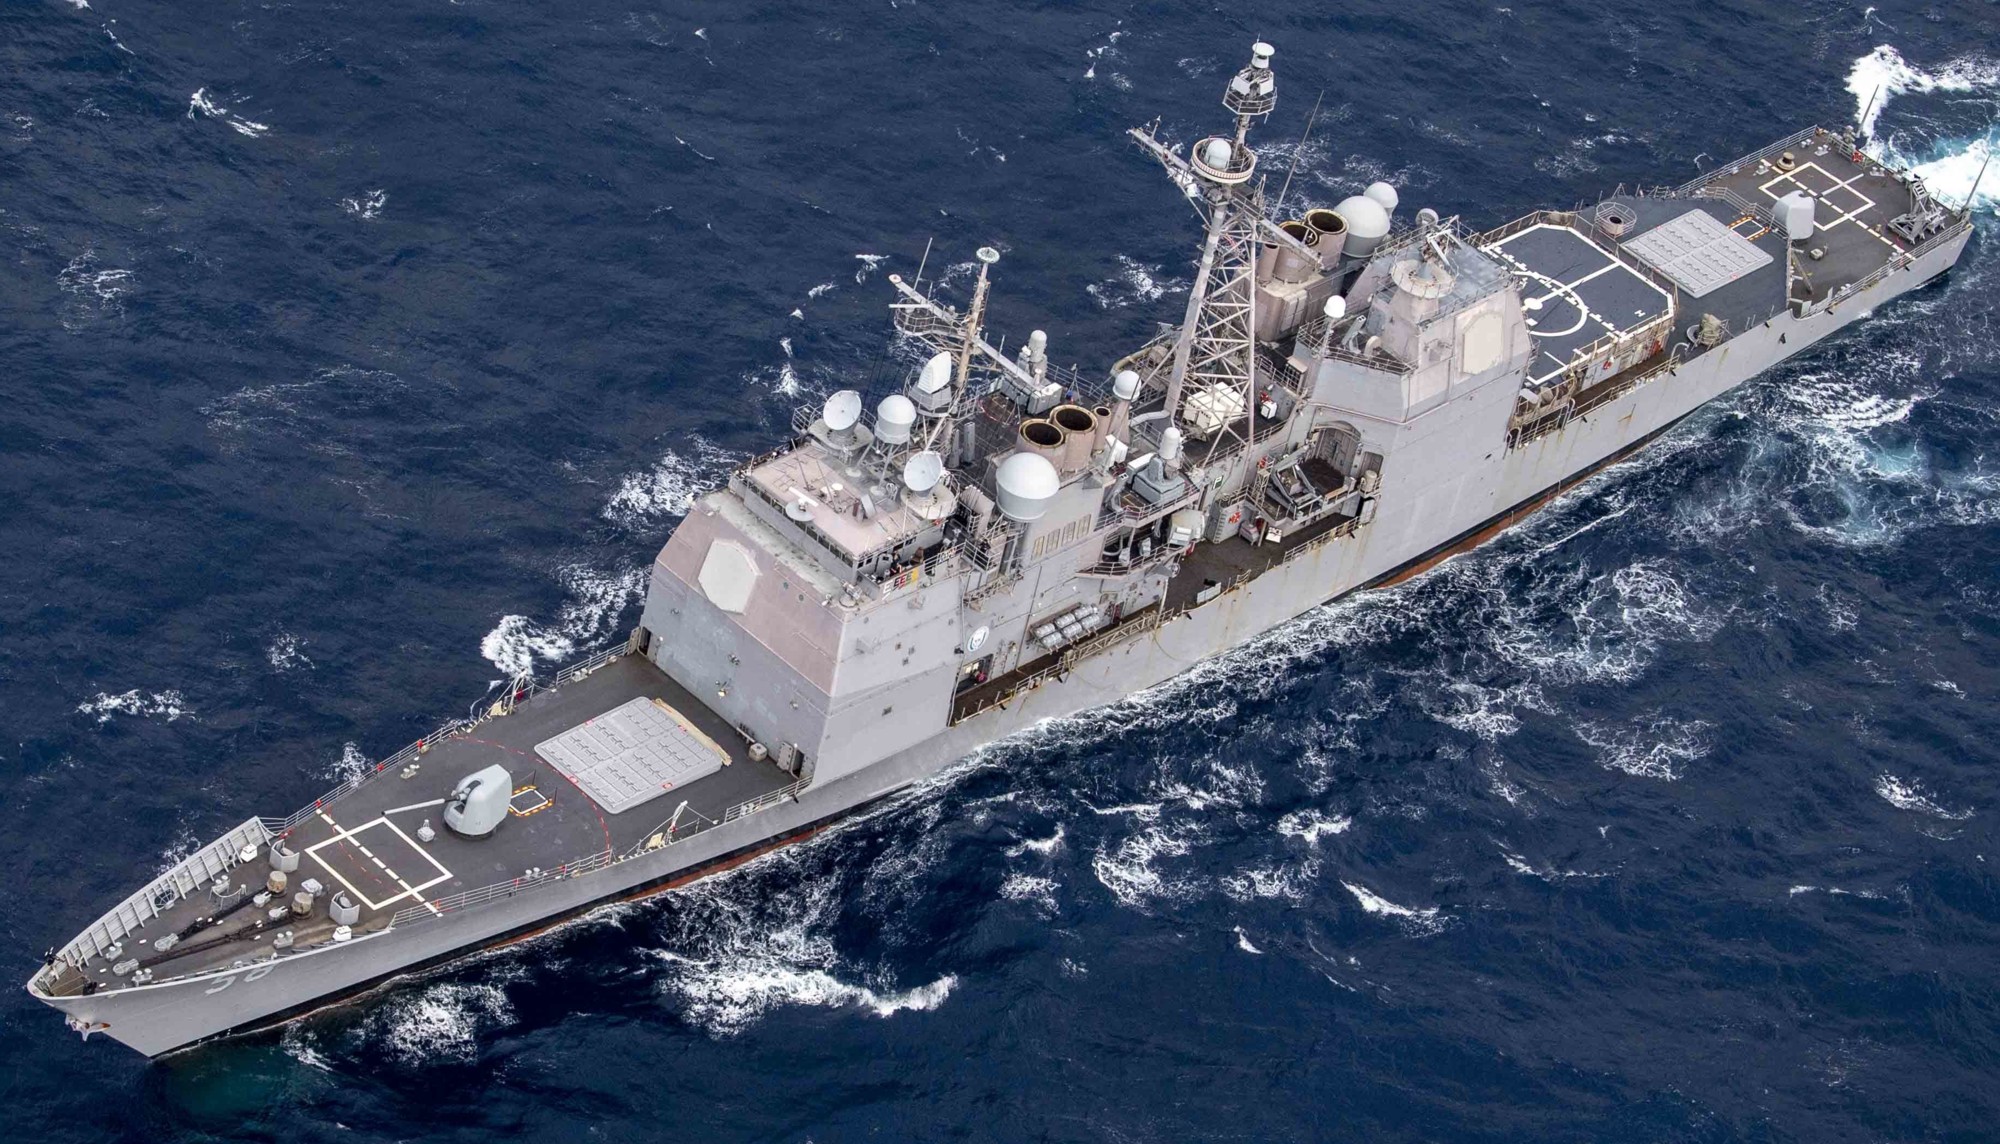 cg-58 uss philippine sea ticonderoga class guided missile cruiser aegis us navy 53